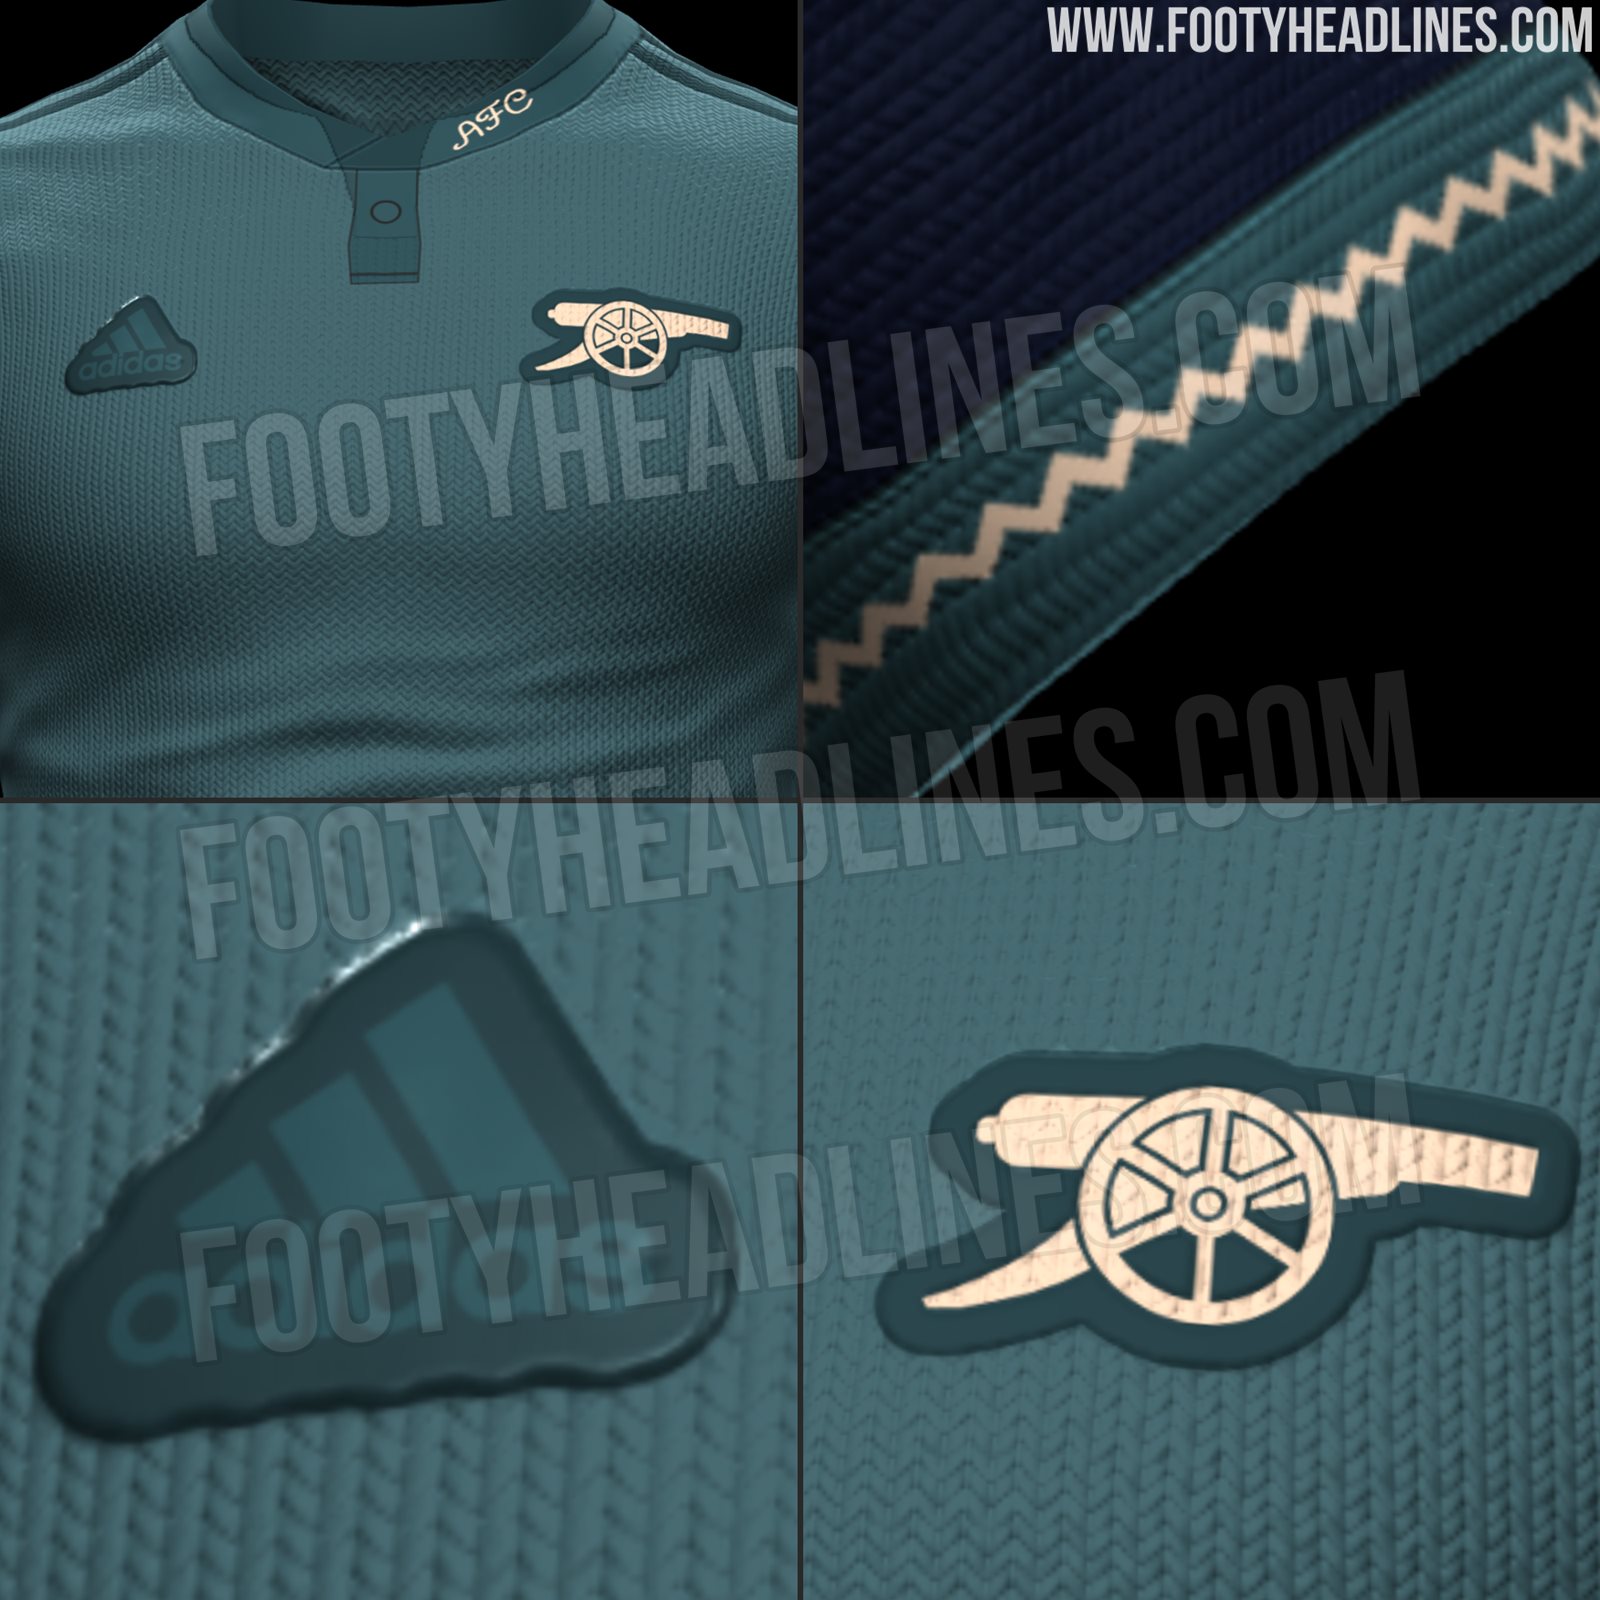 The sponsorless version of Arsenal's 2023/24 third kit (Photo via FootyHeadlines.com)